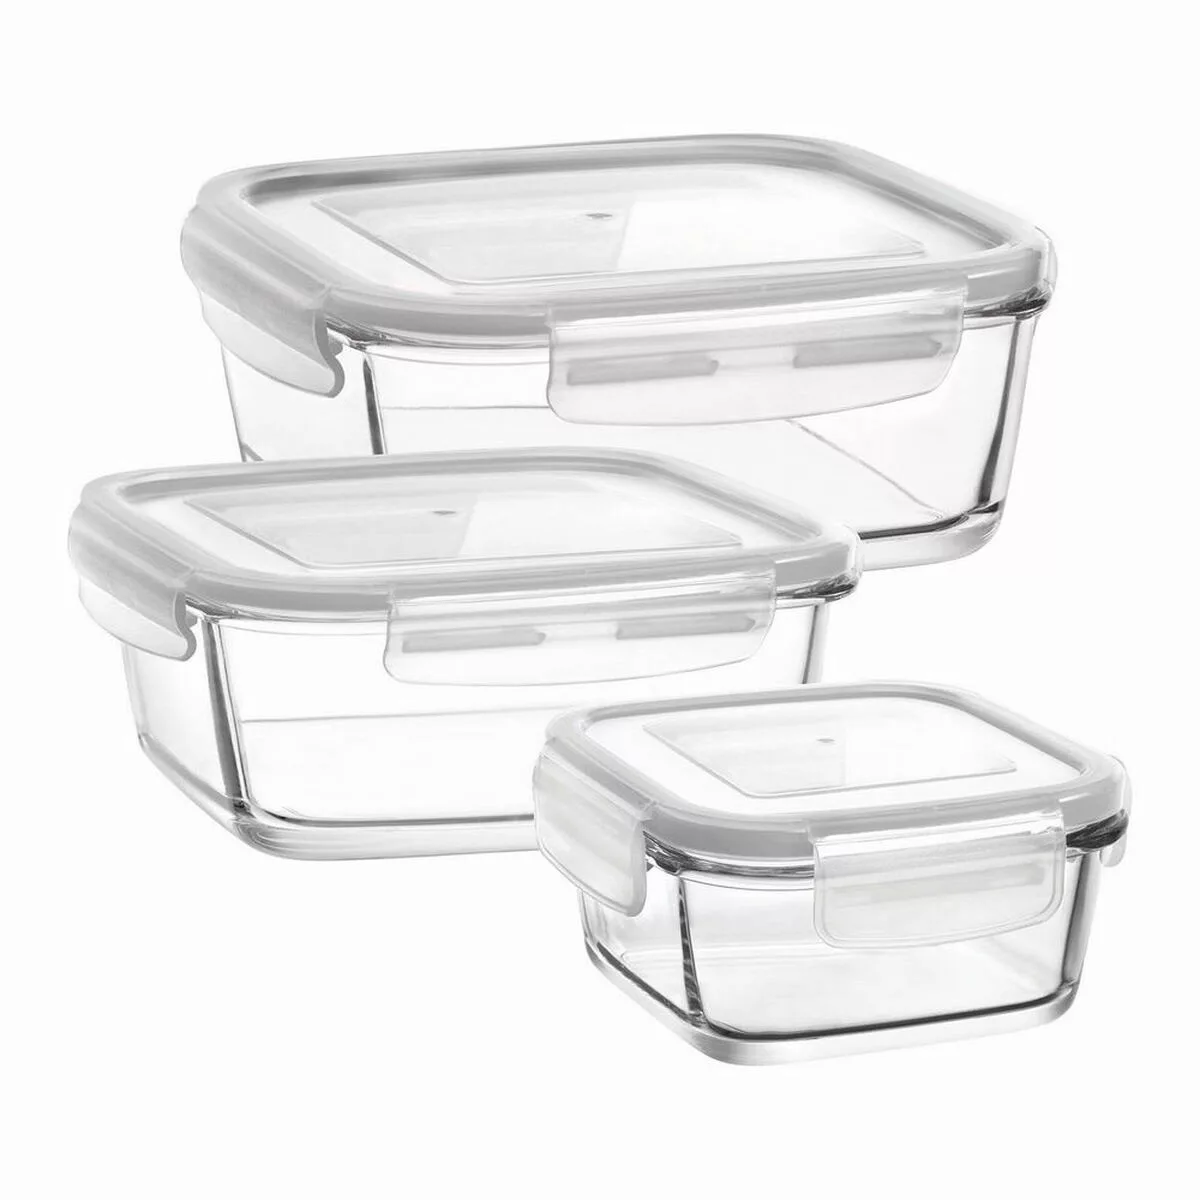 3 Lunchbox-set Lav Kristall (3 Pcs) günstig online kaufen